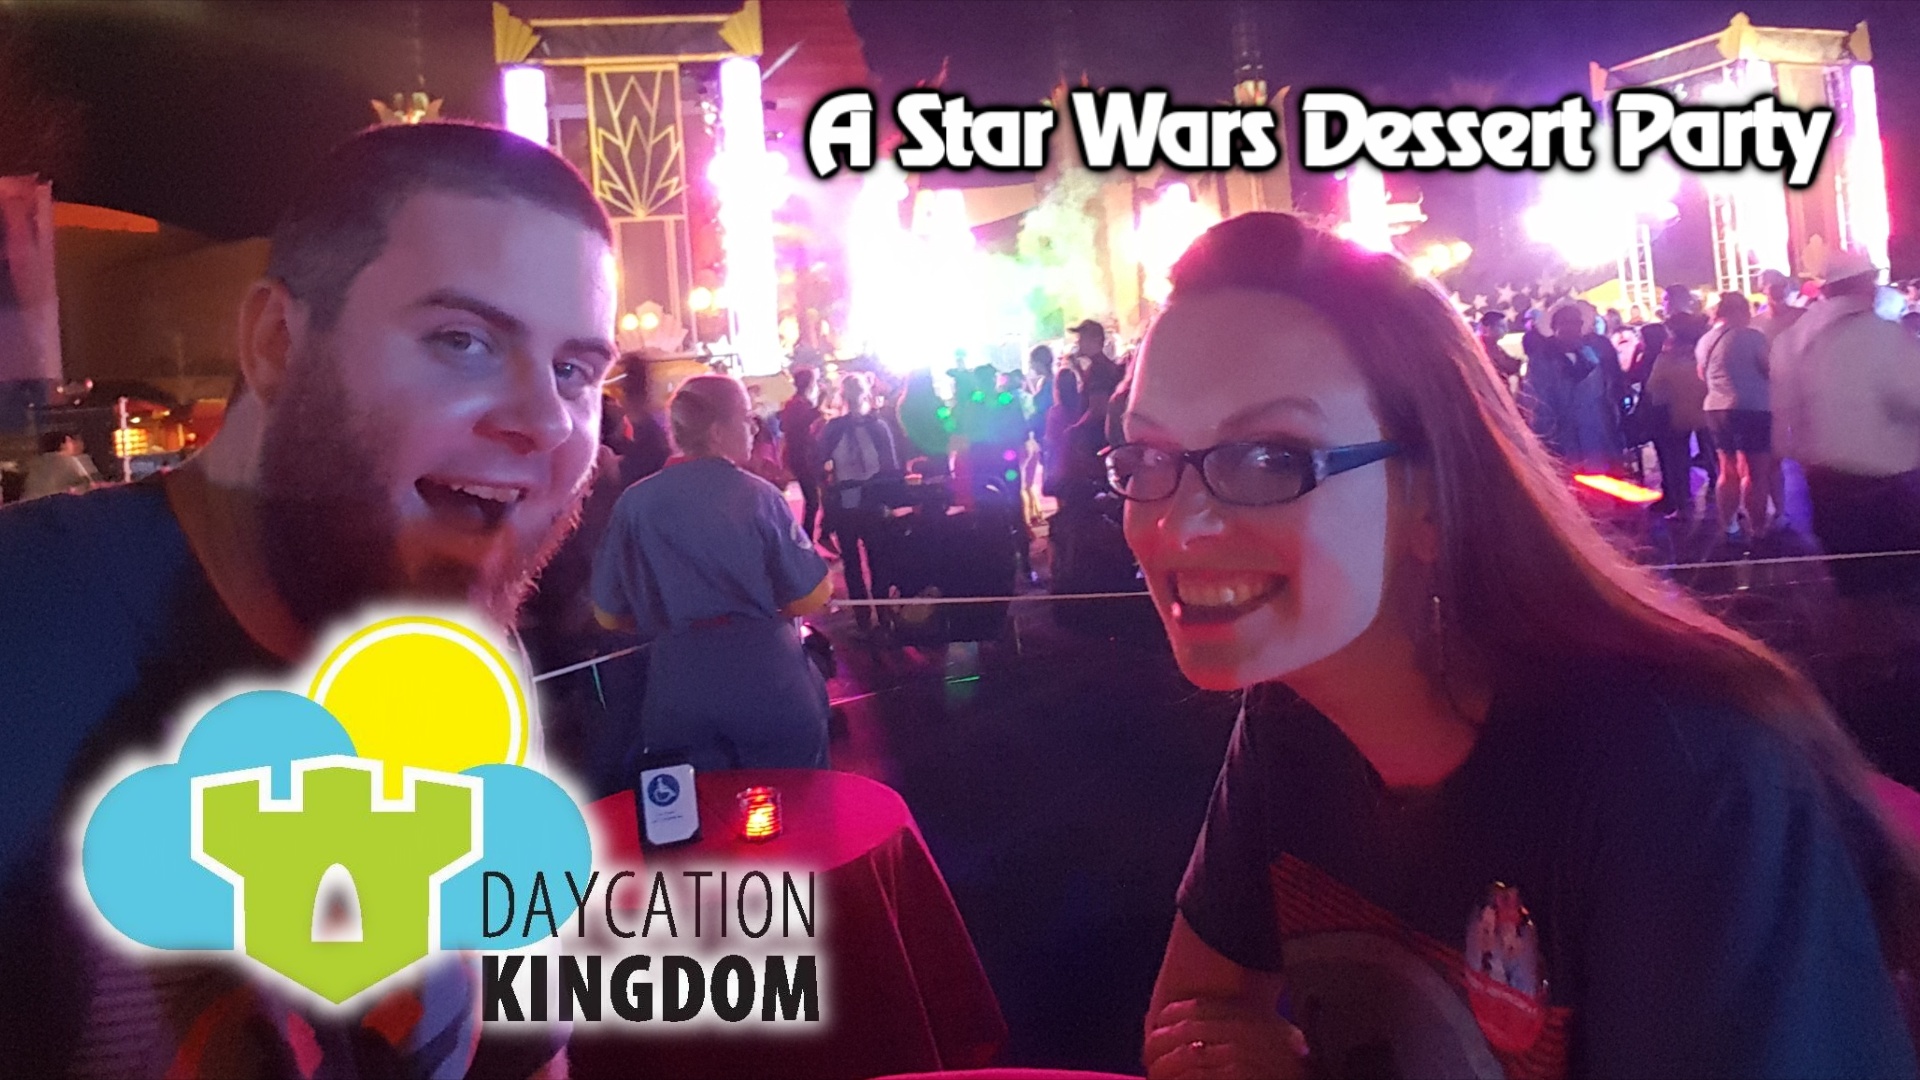 Daycation Kingdom – ‘A Star Wars Dessert Party’ – Episode 19 – Jan. 18, 2016